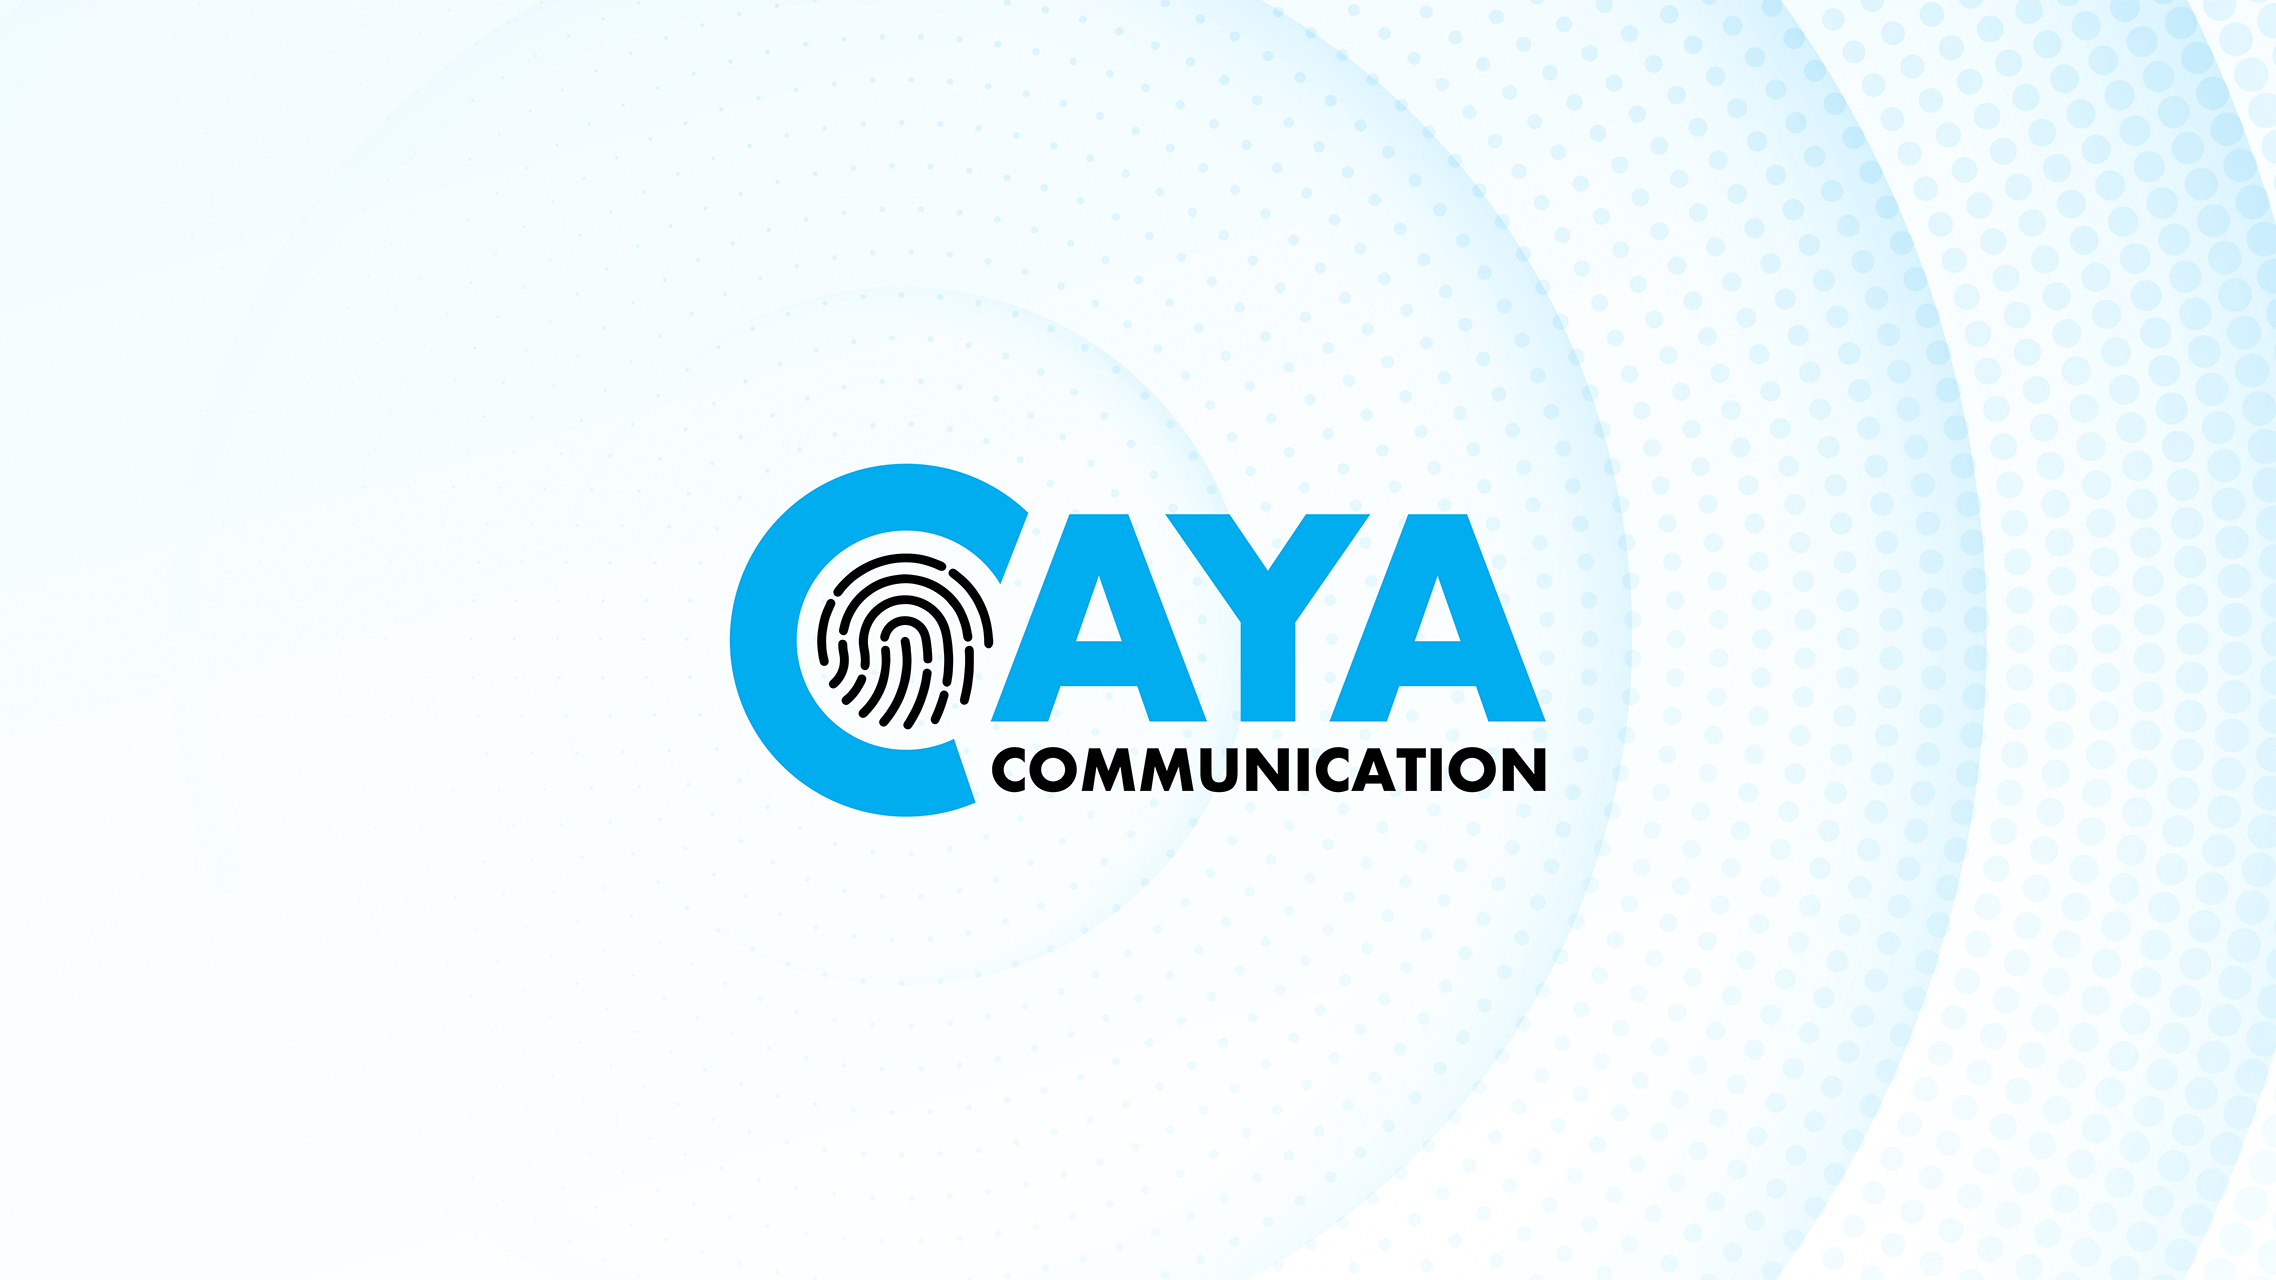 (c) Caya-communication.fr